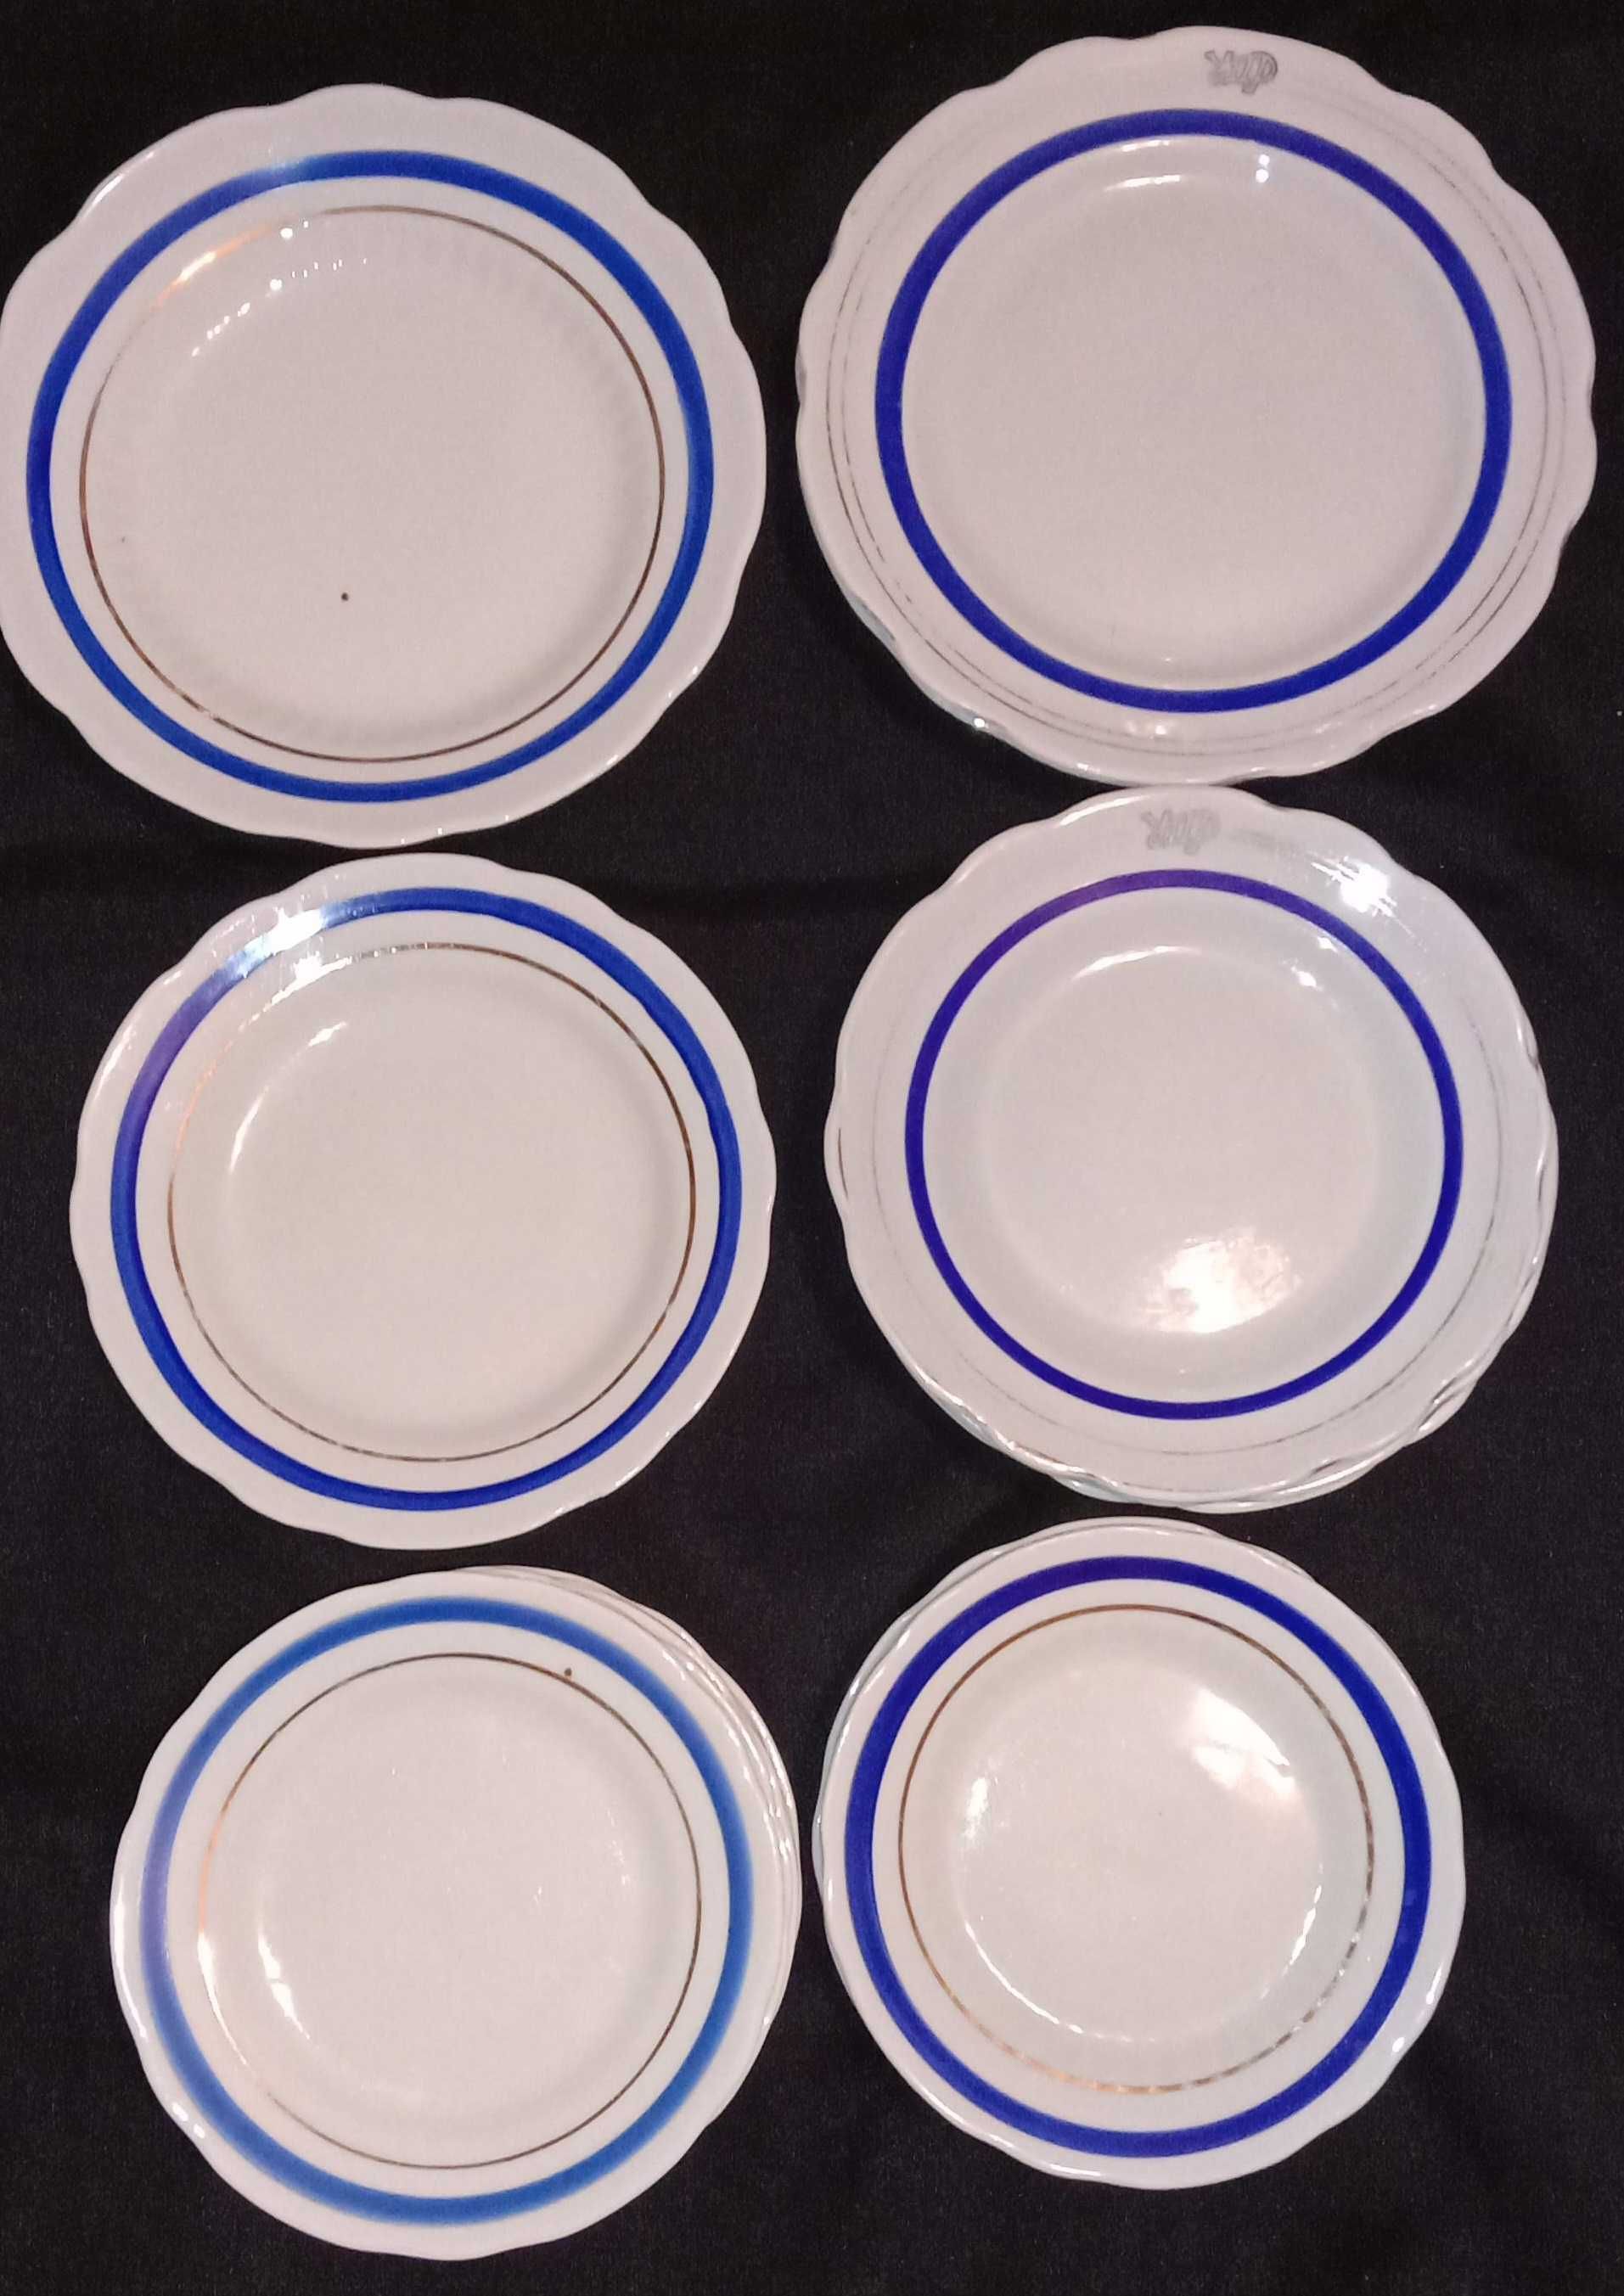 Тарелки синяя полоса, волнистая кромка. 15 шт. Диаметр 15-20см. Посуда